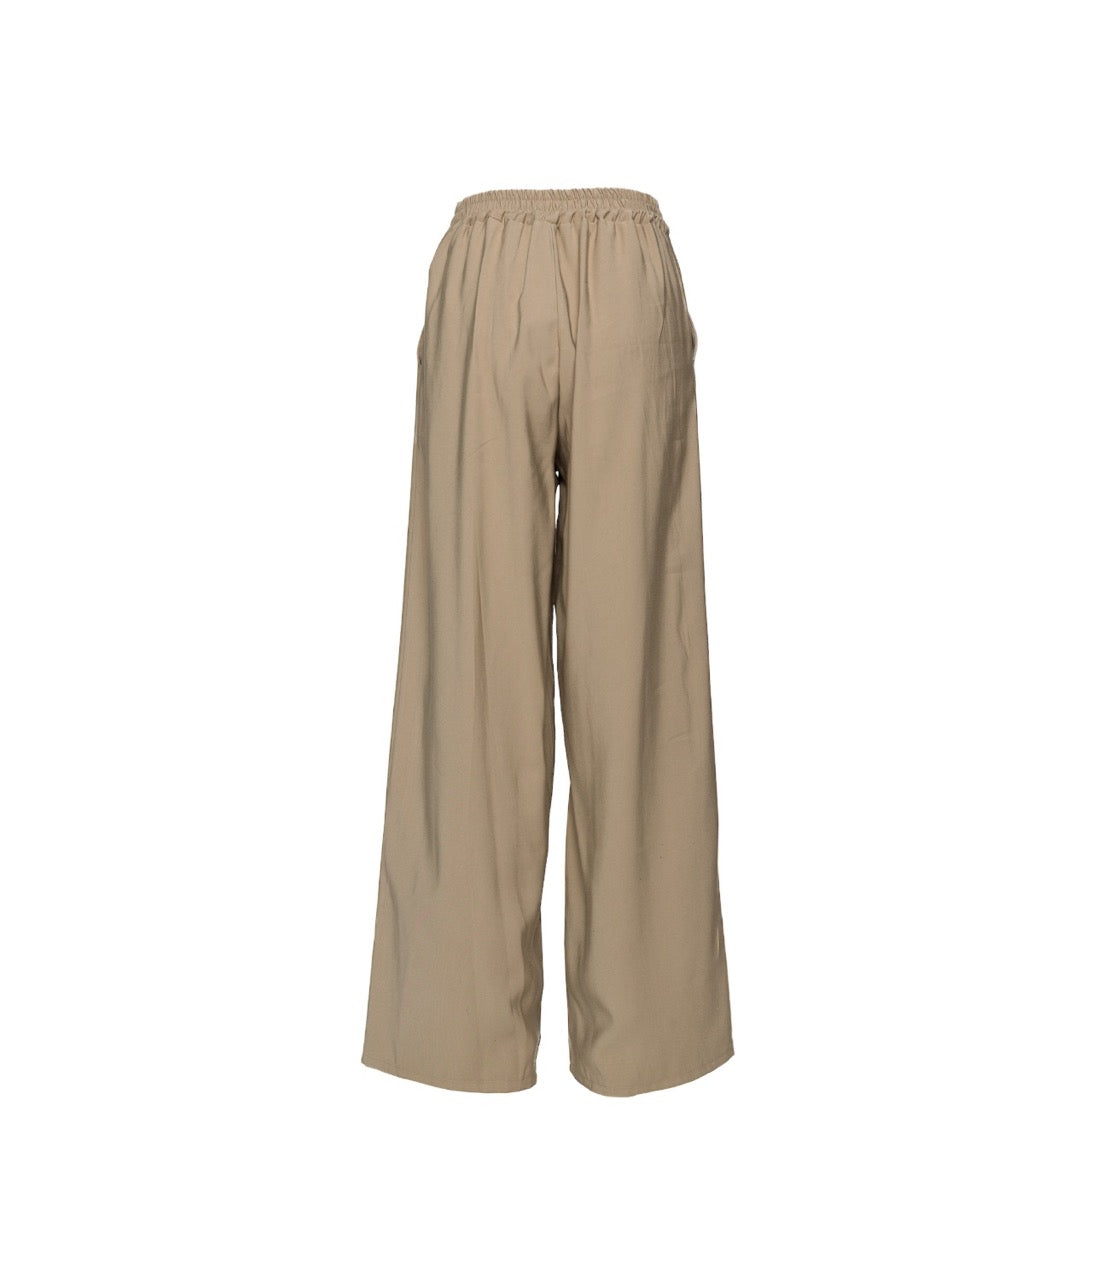 Saiph camel pants